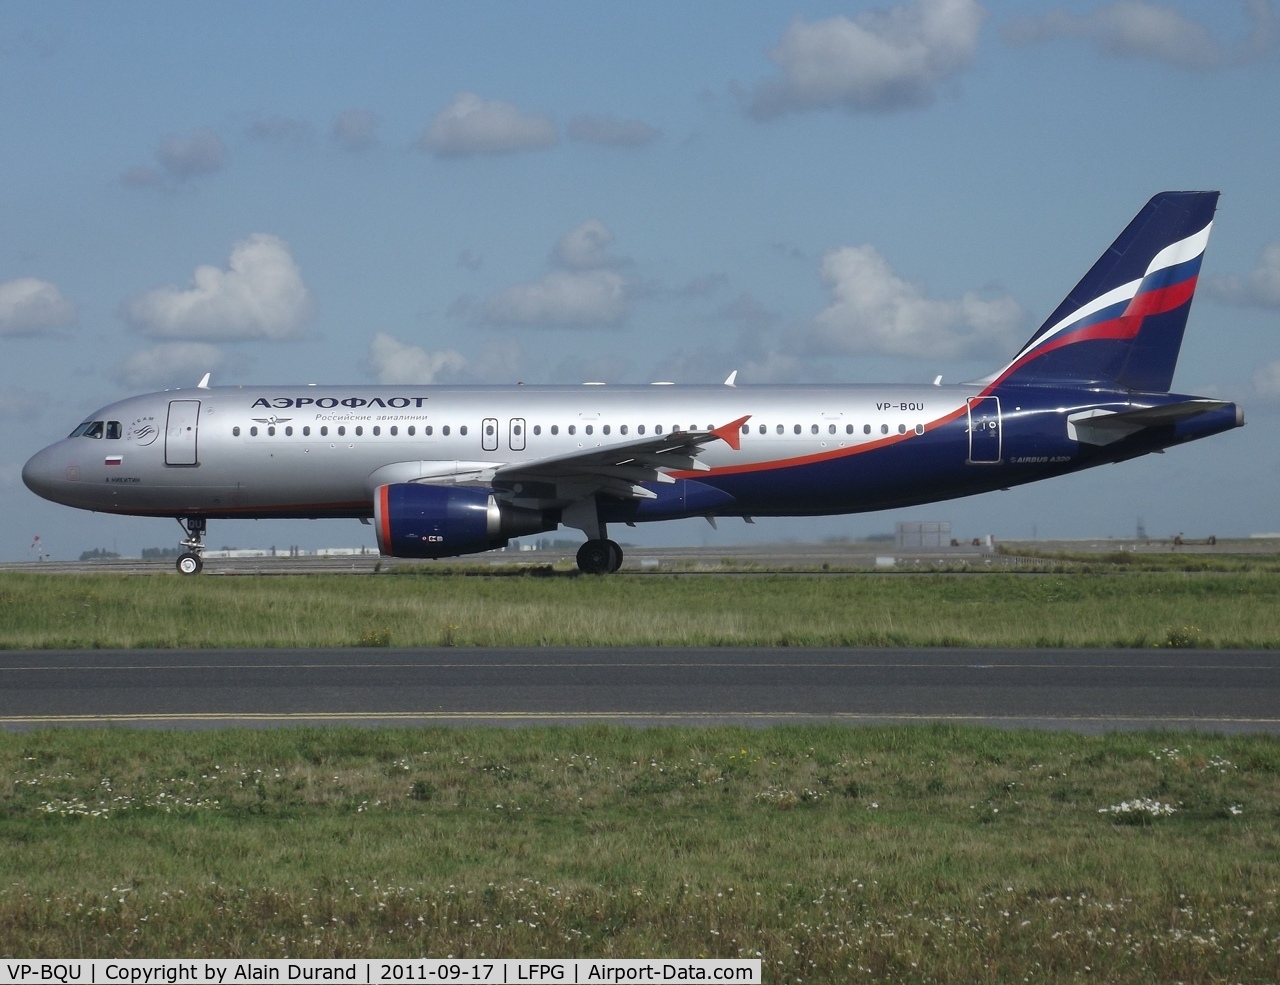 VP-BQU, 2008 Airbus A320-214 C/N 3373, taxy to runway 09R